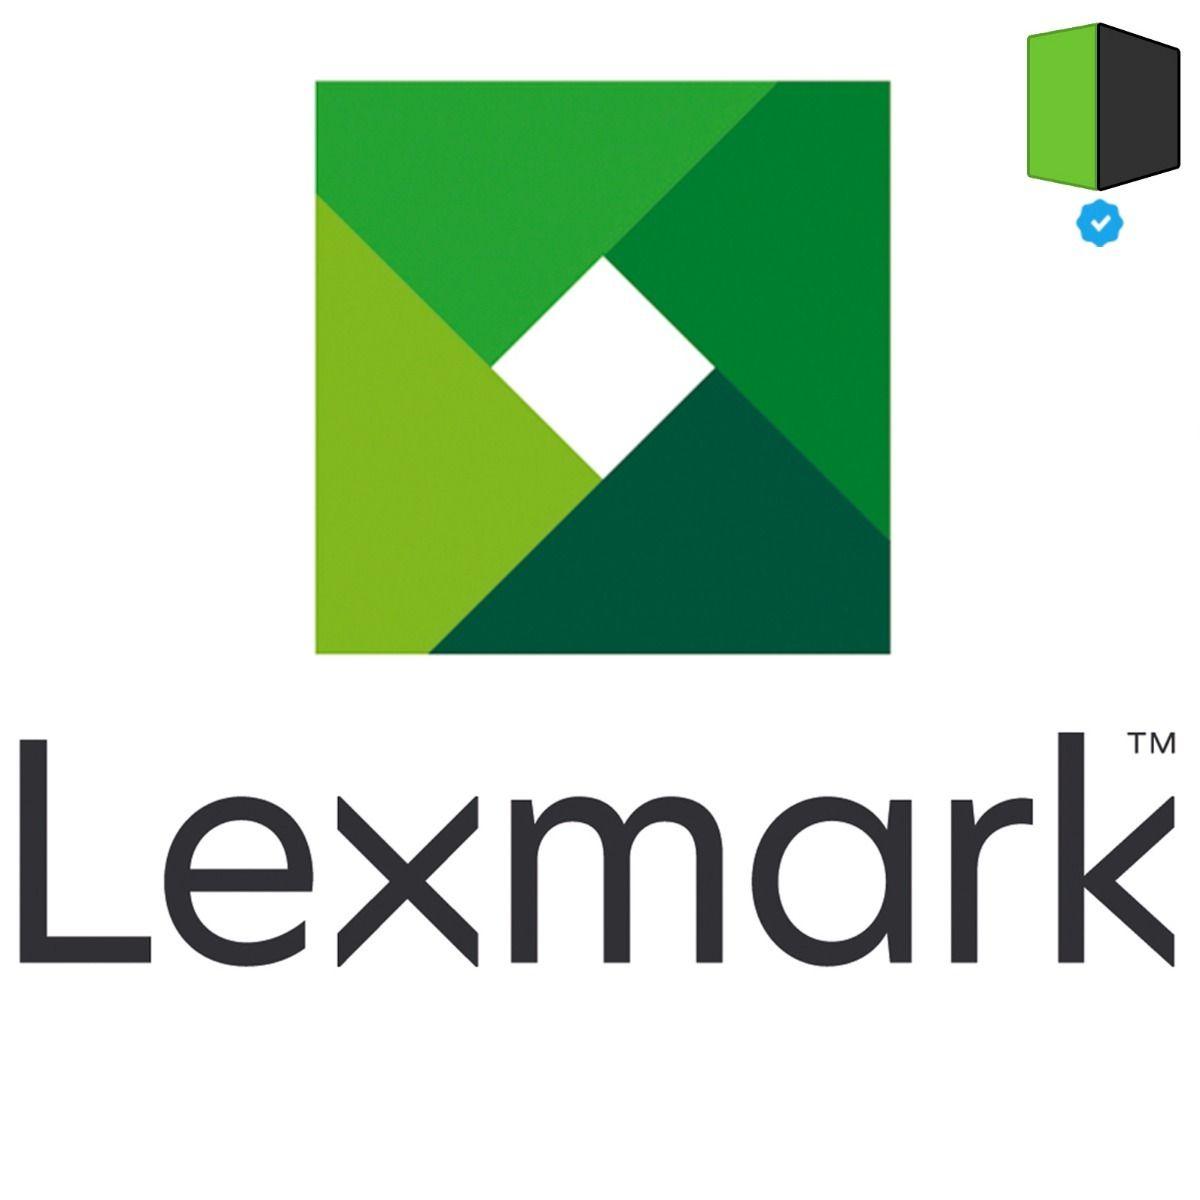 Old Lexmark Logo - Lexmark Old Logo | www.miifotos.com